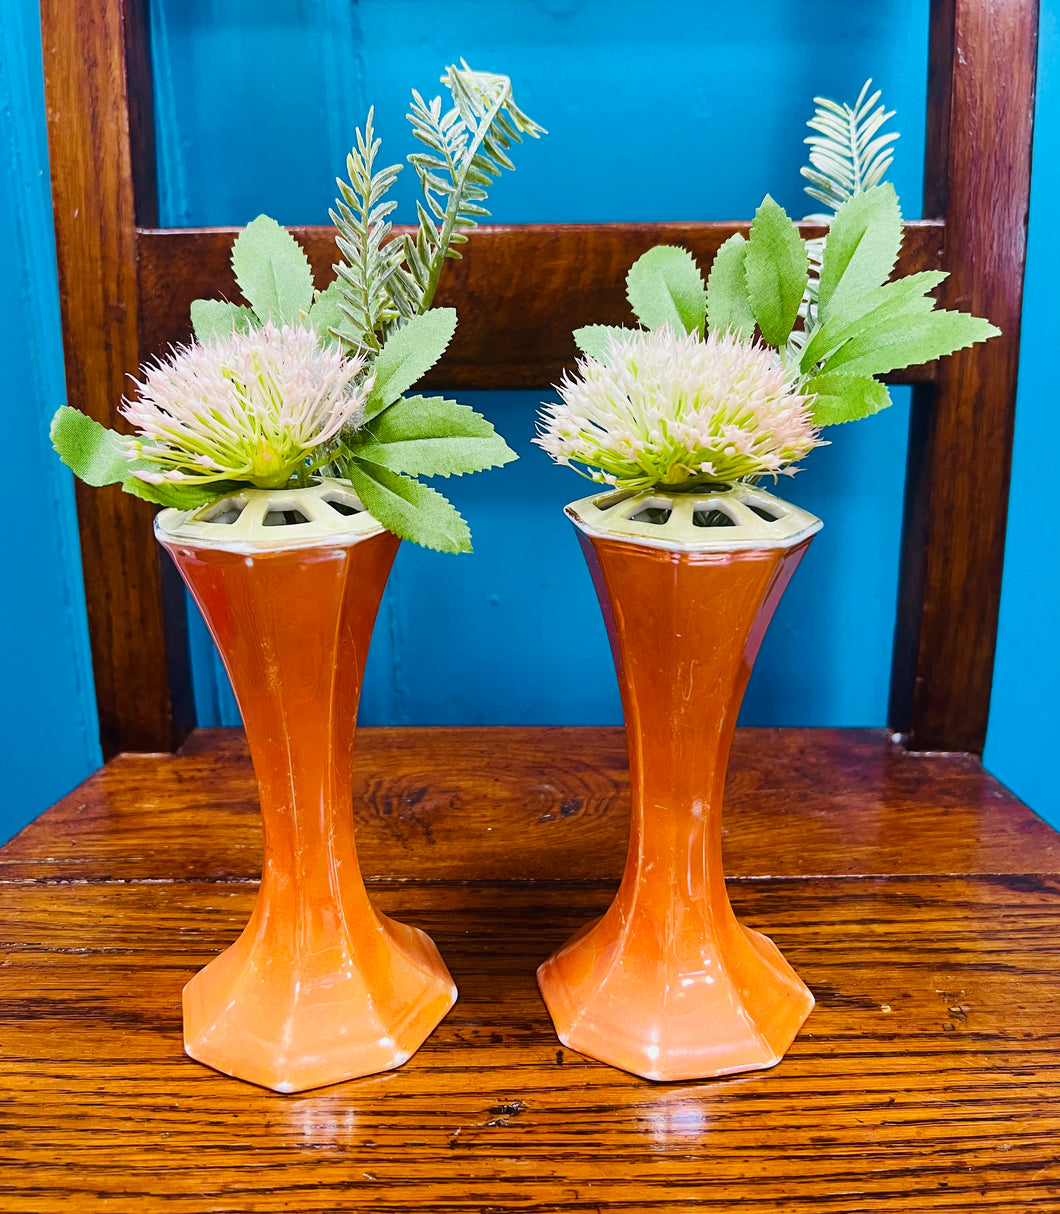 Pâr o vasys ‘flower frog’ 9 twll Lustreware oren Vintage Art Deco o’r 30au / Pair of Vintage Art Deco 9 hole flower frog orange Lustreware vases from the 30s